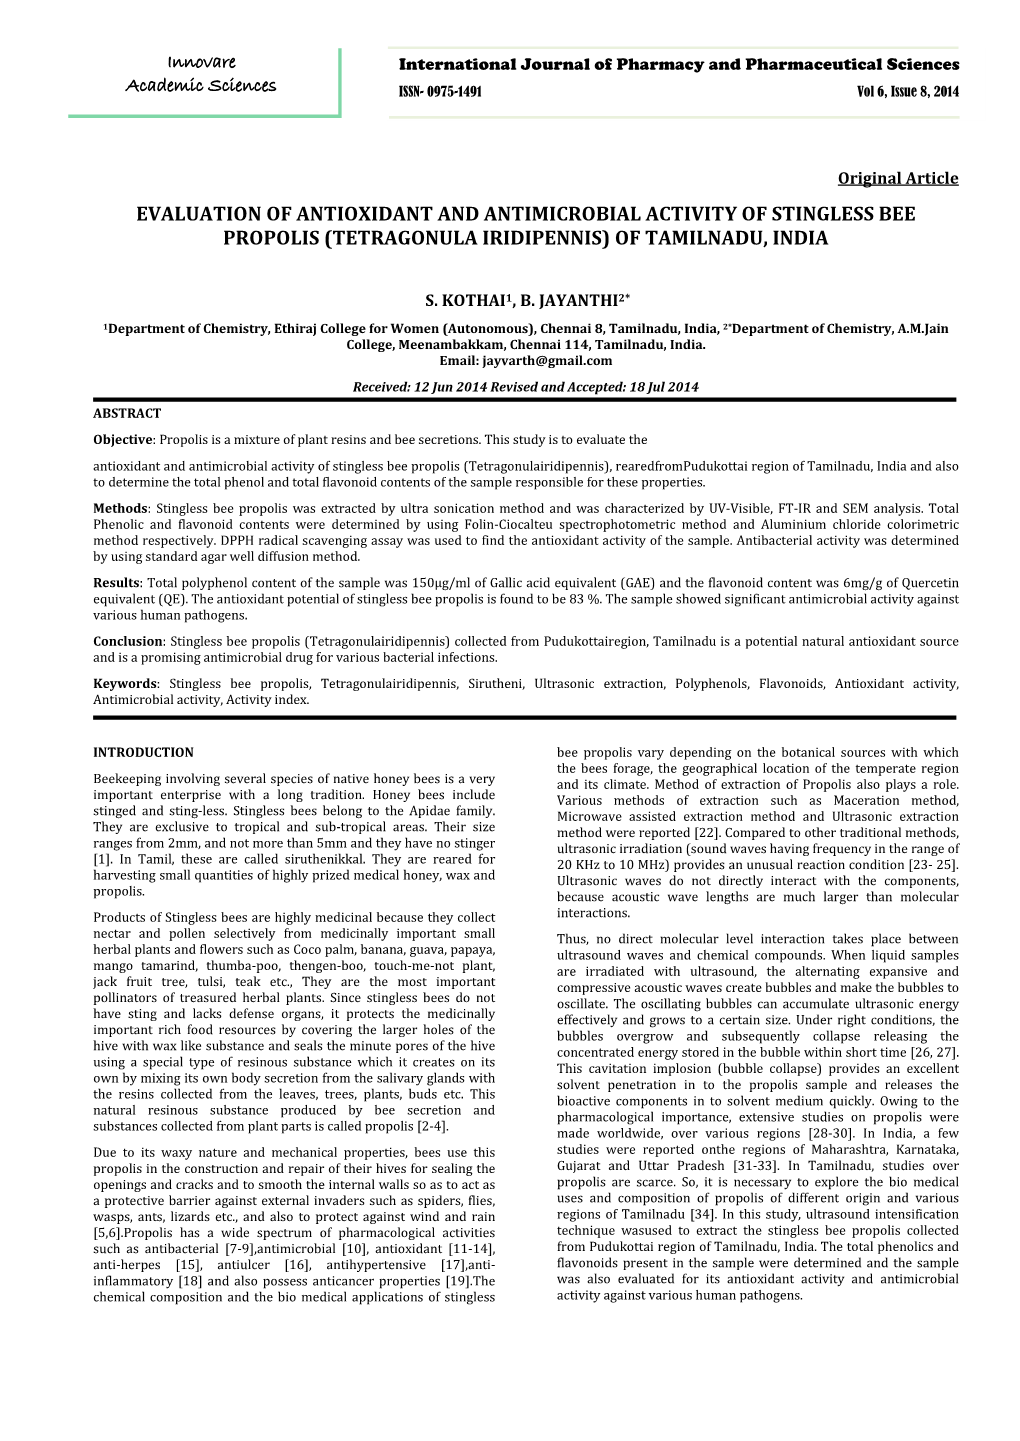 Evaluation of Antioxidant and Antimicrobial Activity of Stingless Bee Propolis (Tetragonula Iridipennis) of Tamilnadu, India